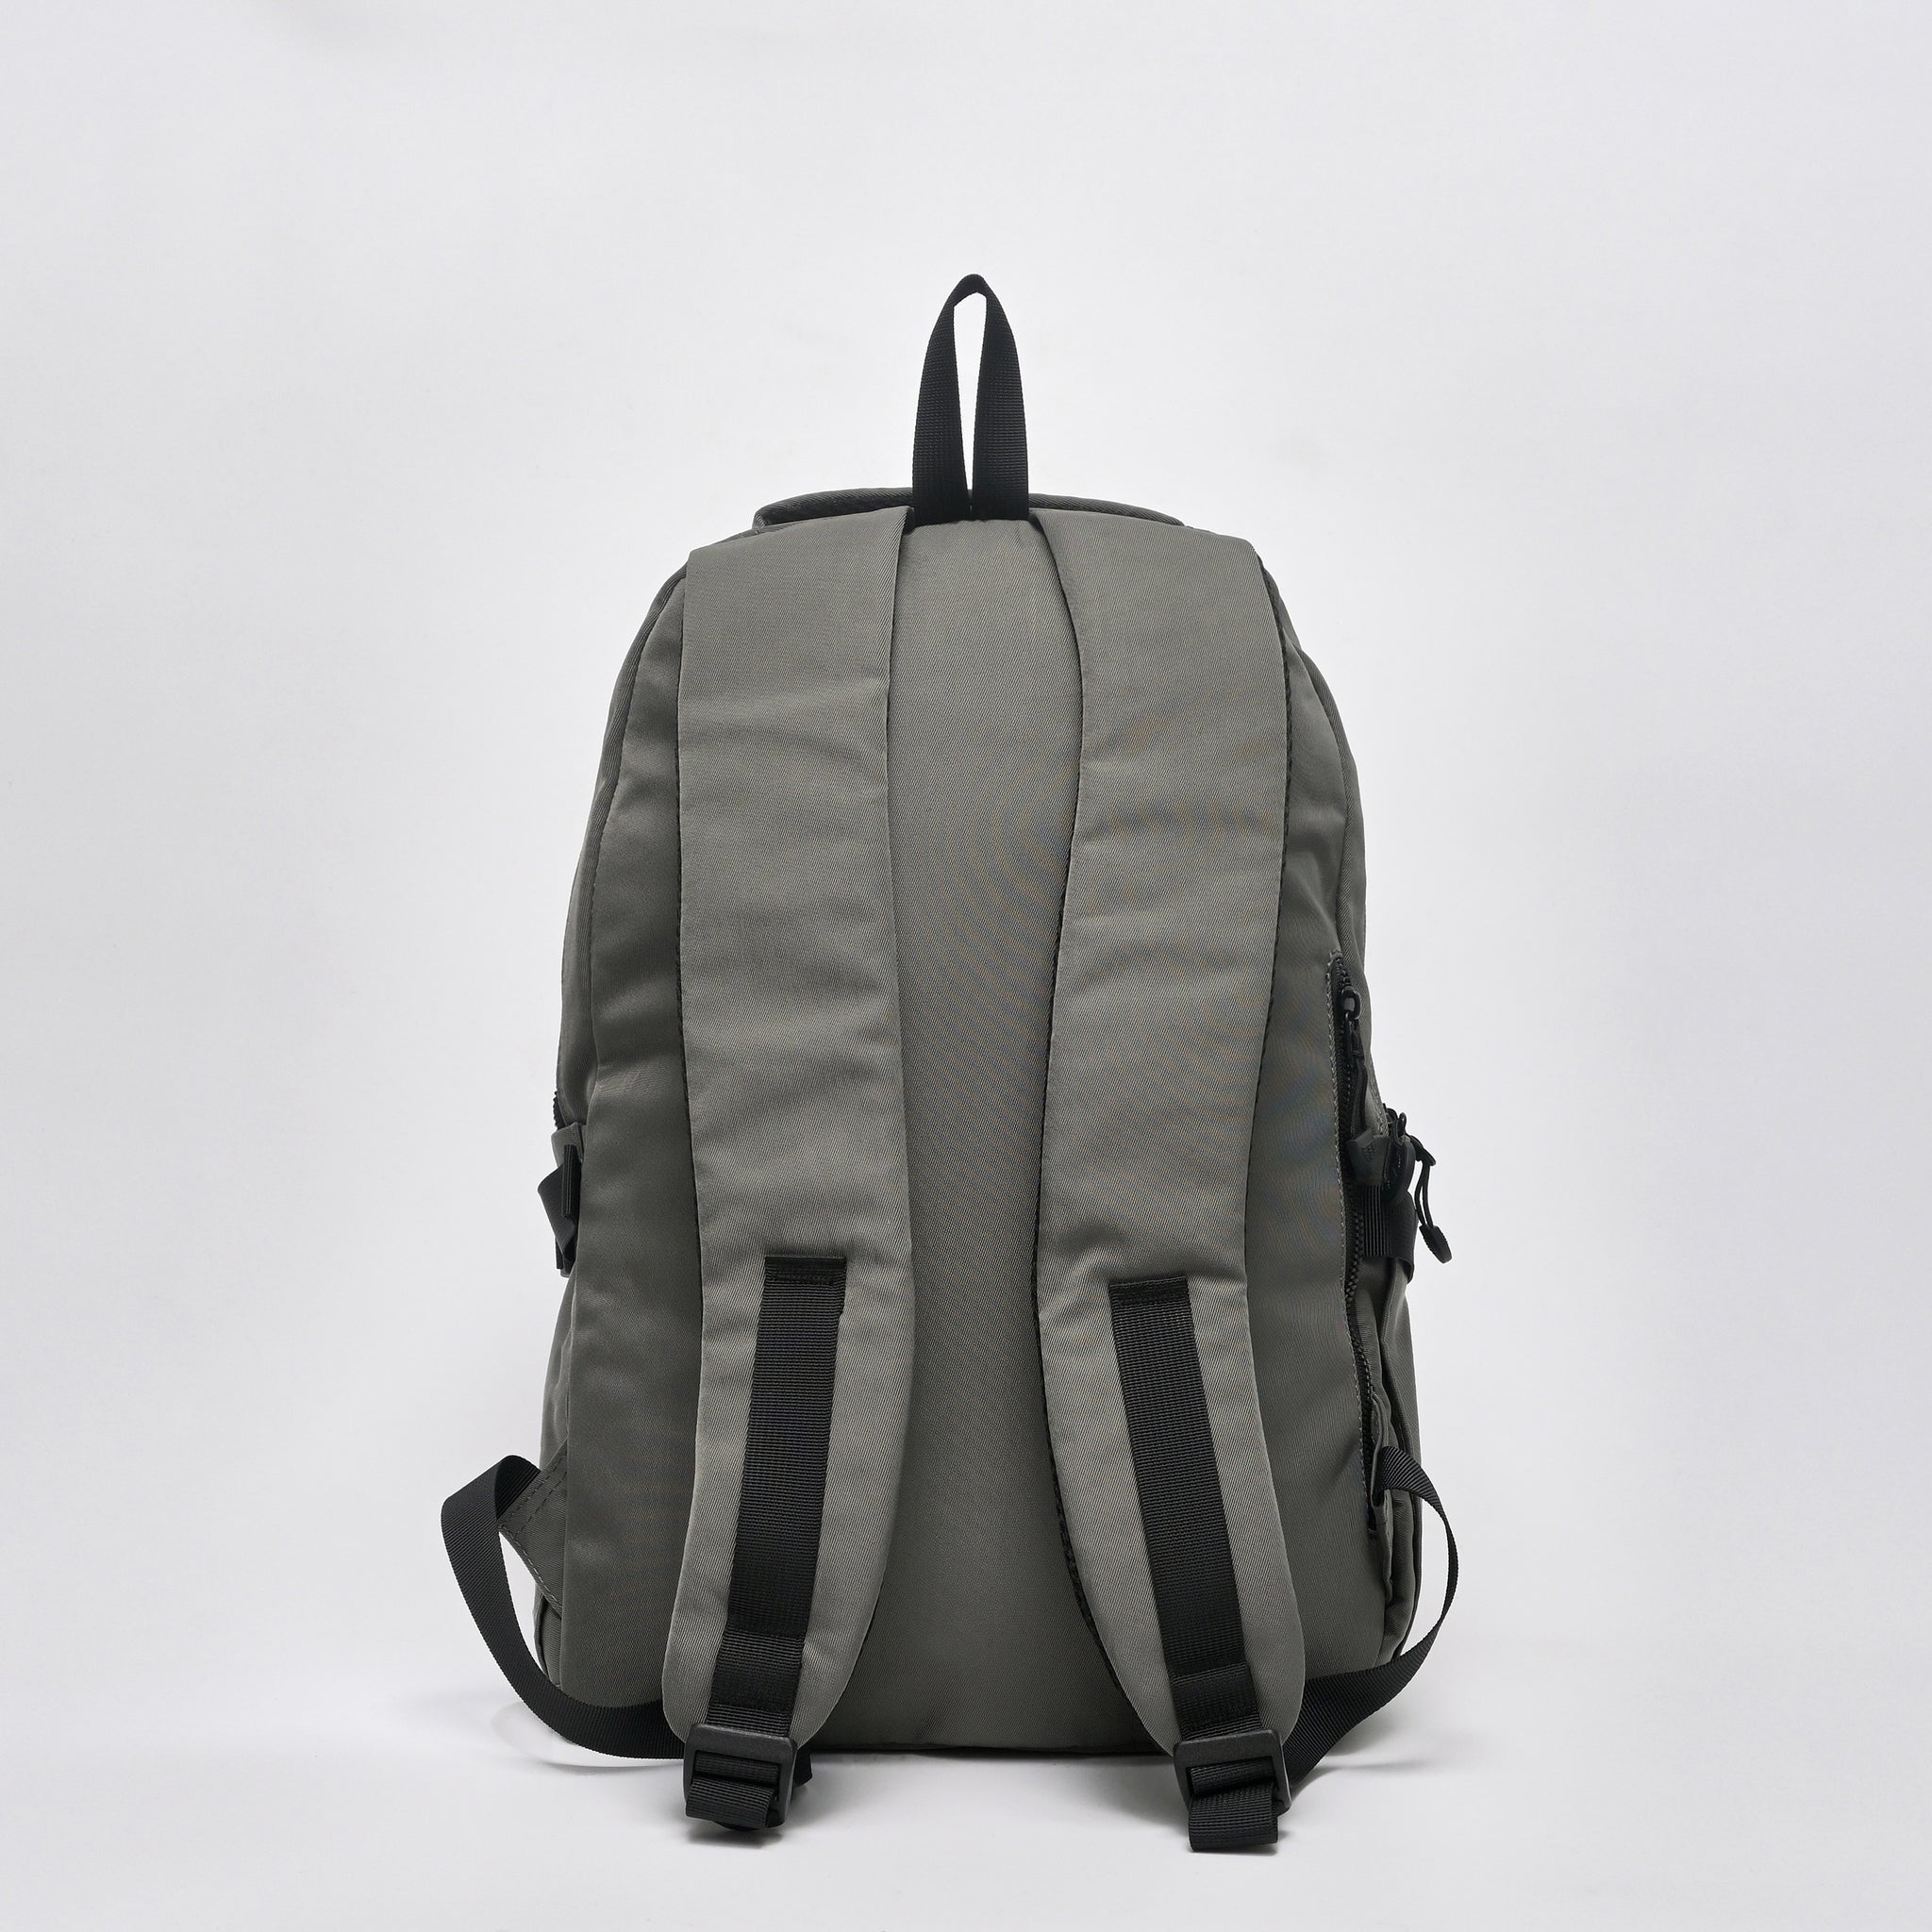 Casual laptop backpack with zipper pockets - TGBP1533NN3BK3